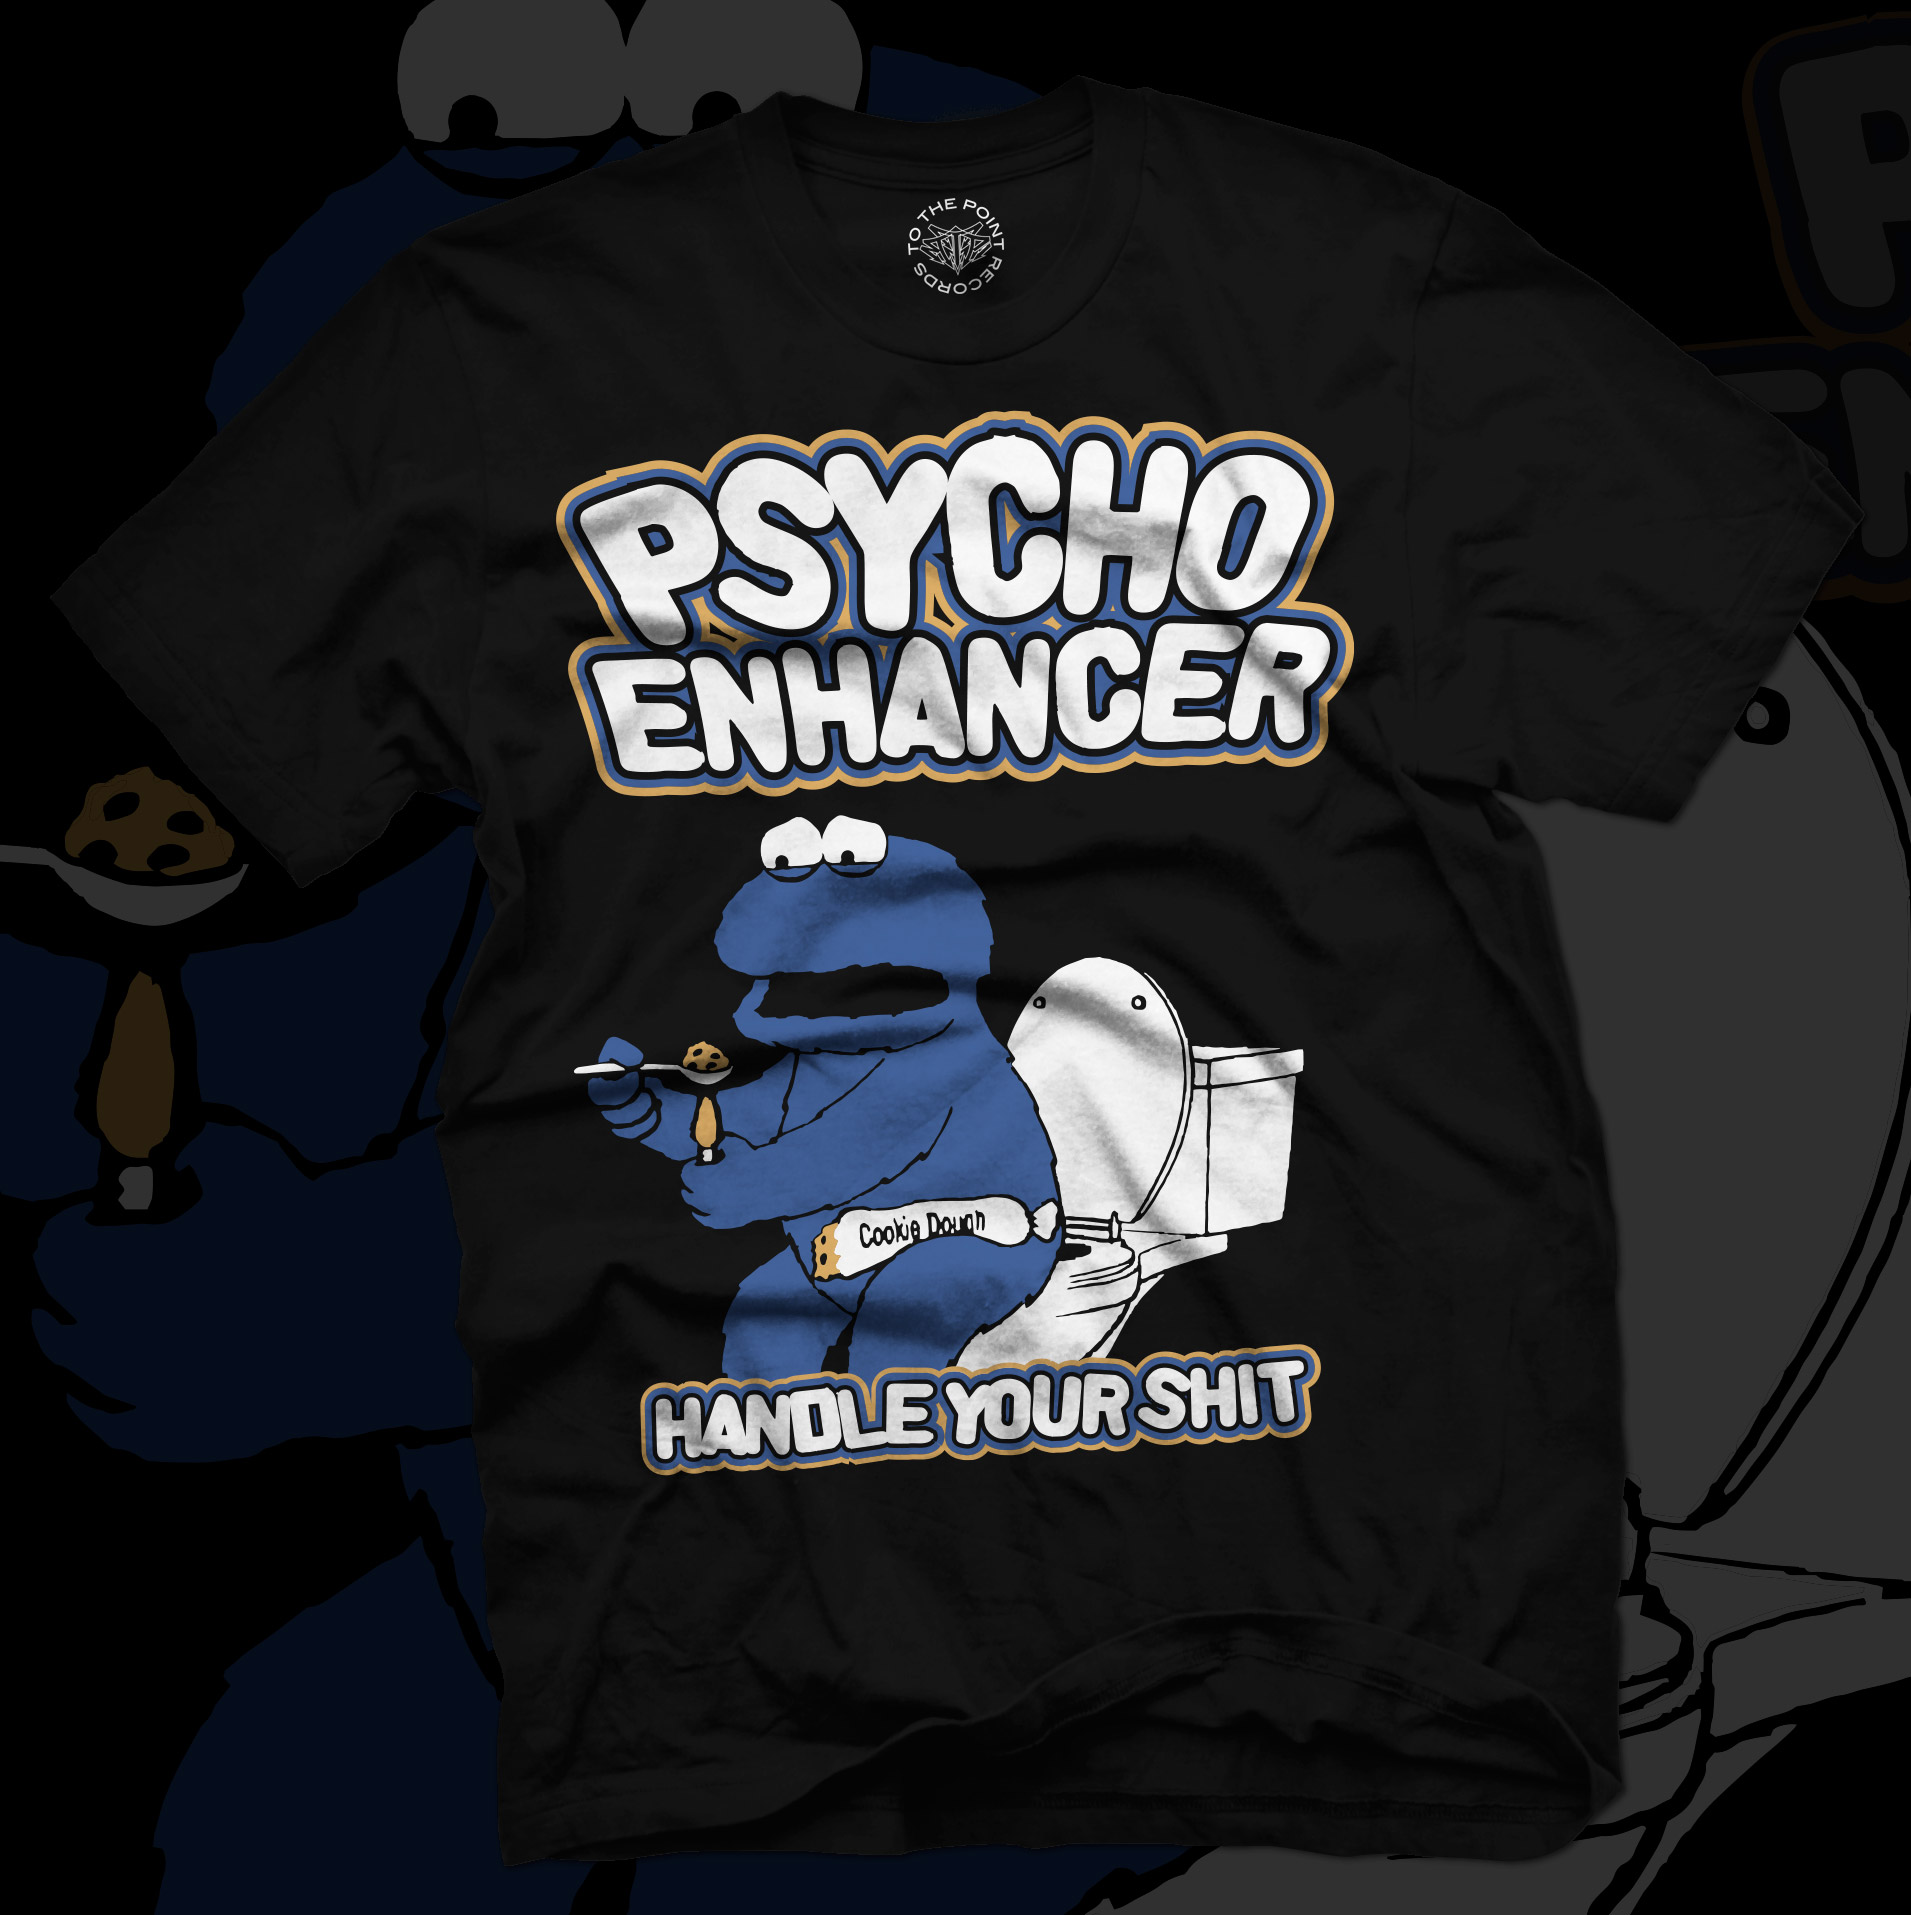 Psycho Enhancer "Handle Your Sh*t" Shirt